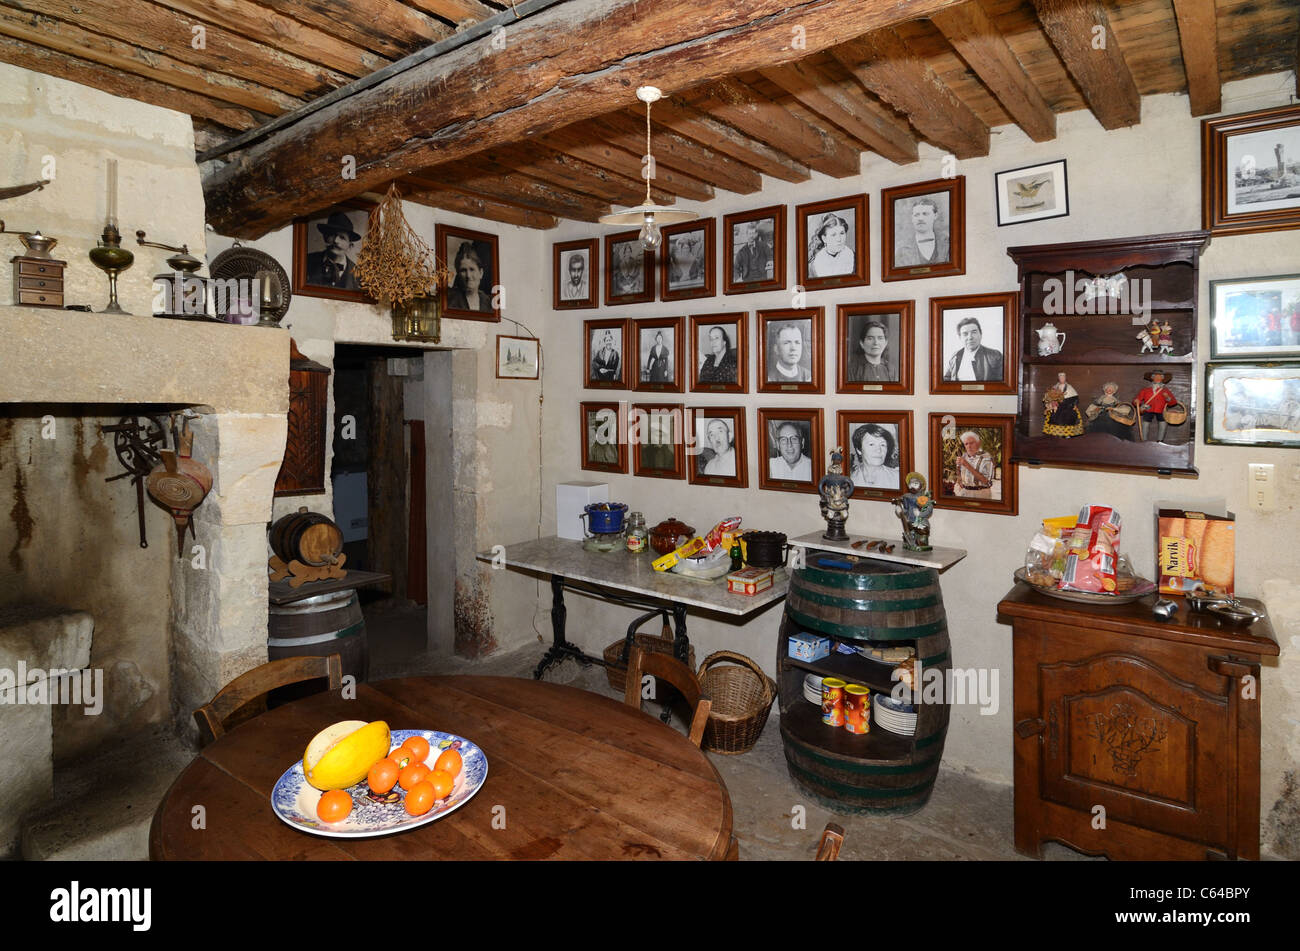 Old or Rustic Kitchen of Troglodyte Farmhouse, House or Dwelling, Mas de la Pyramide, with Family Portraits, nr Saint-Rémy-de-Provence Provence France Stock Photo